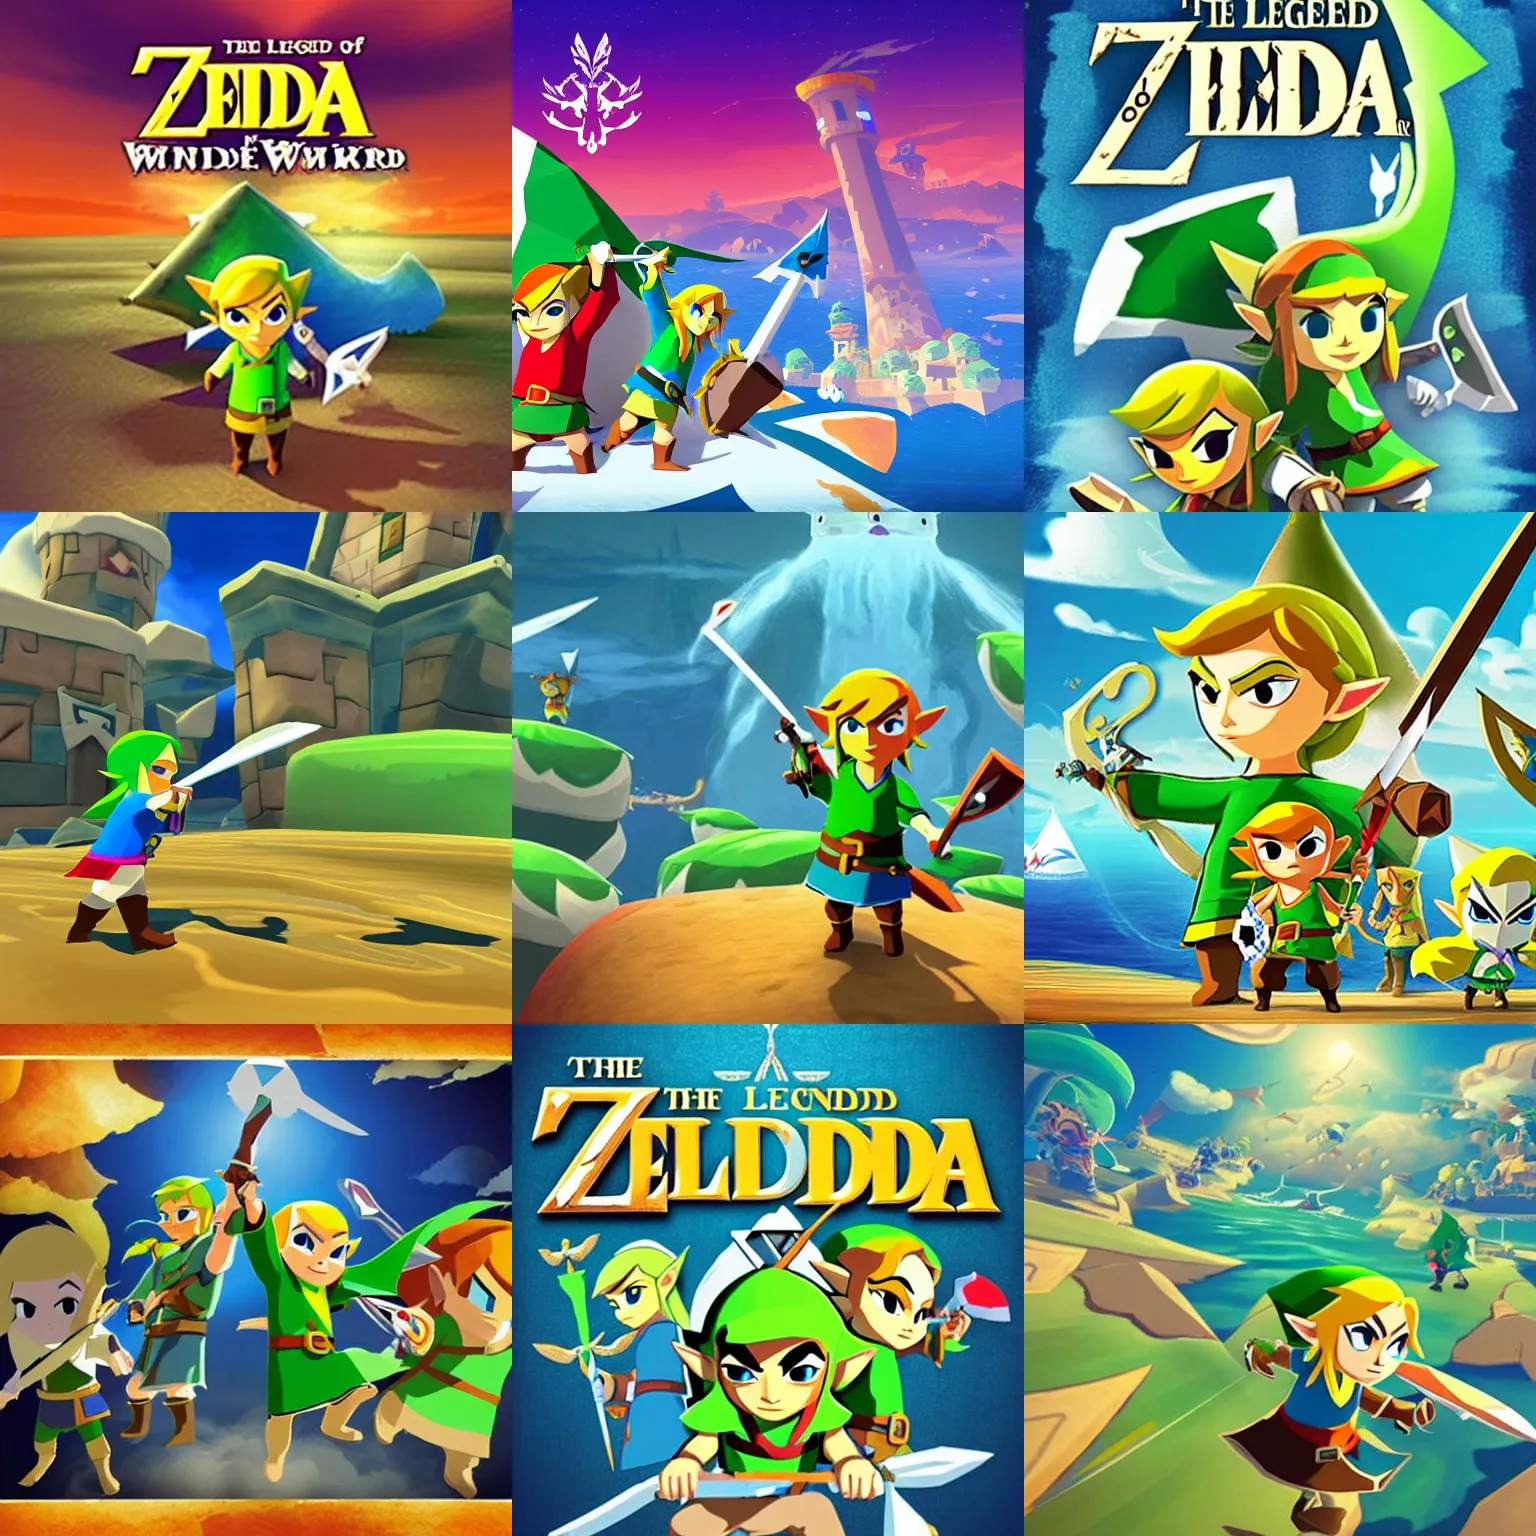 PRINCESS ZELDA - The Legend of Zelda: The Wind Waker 